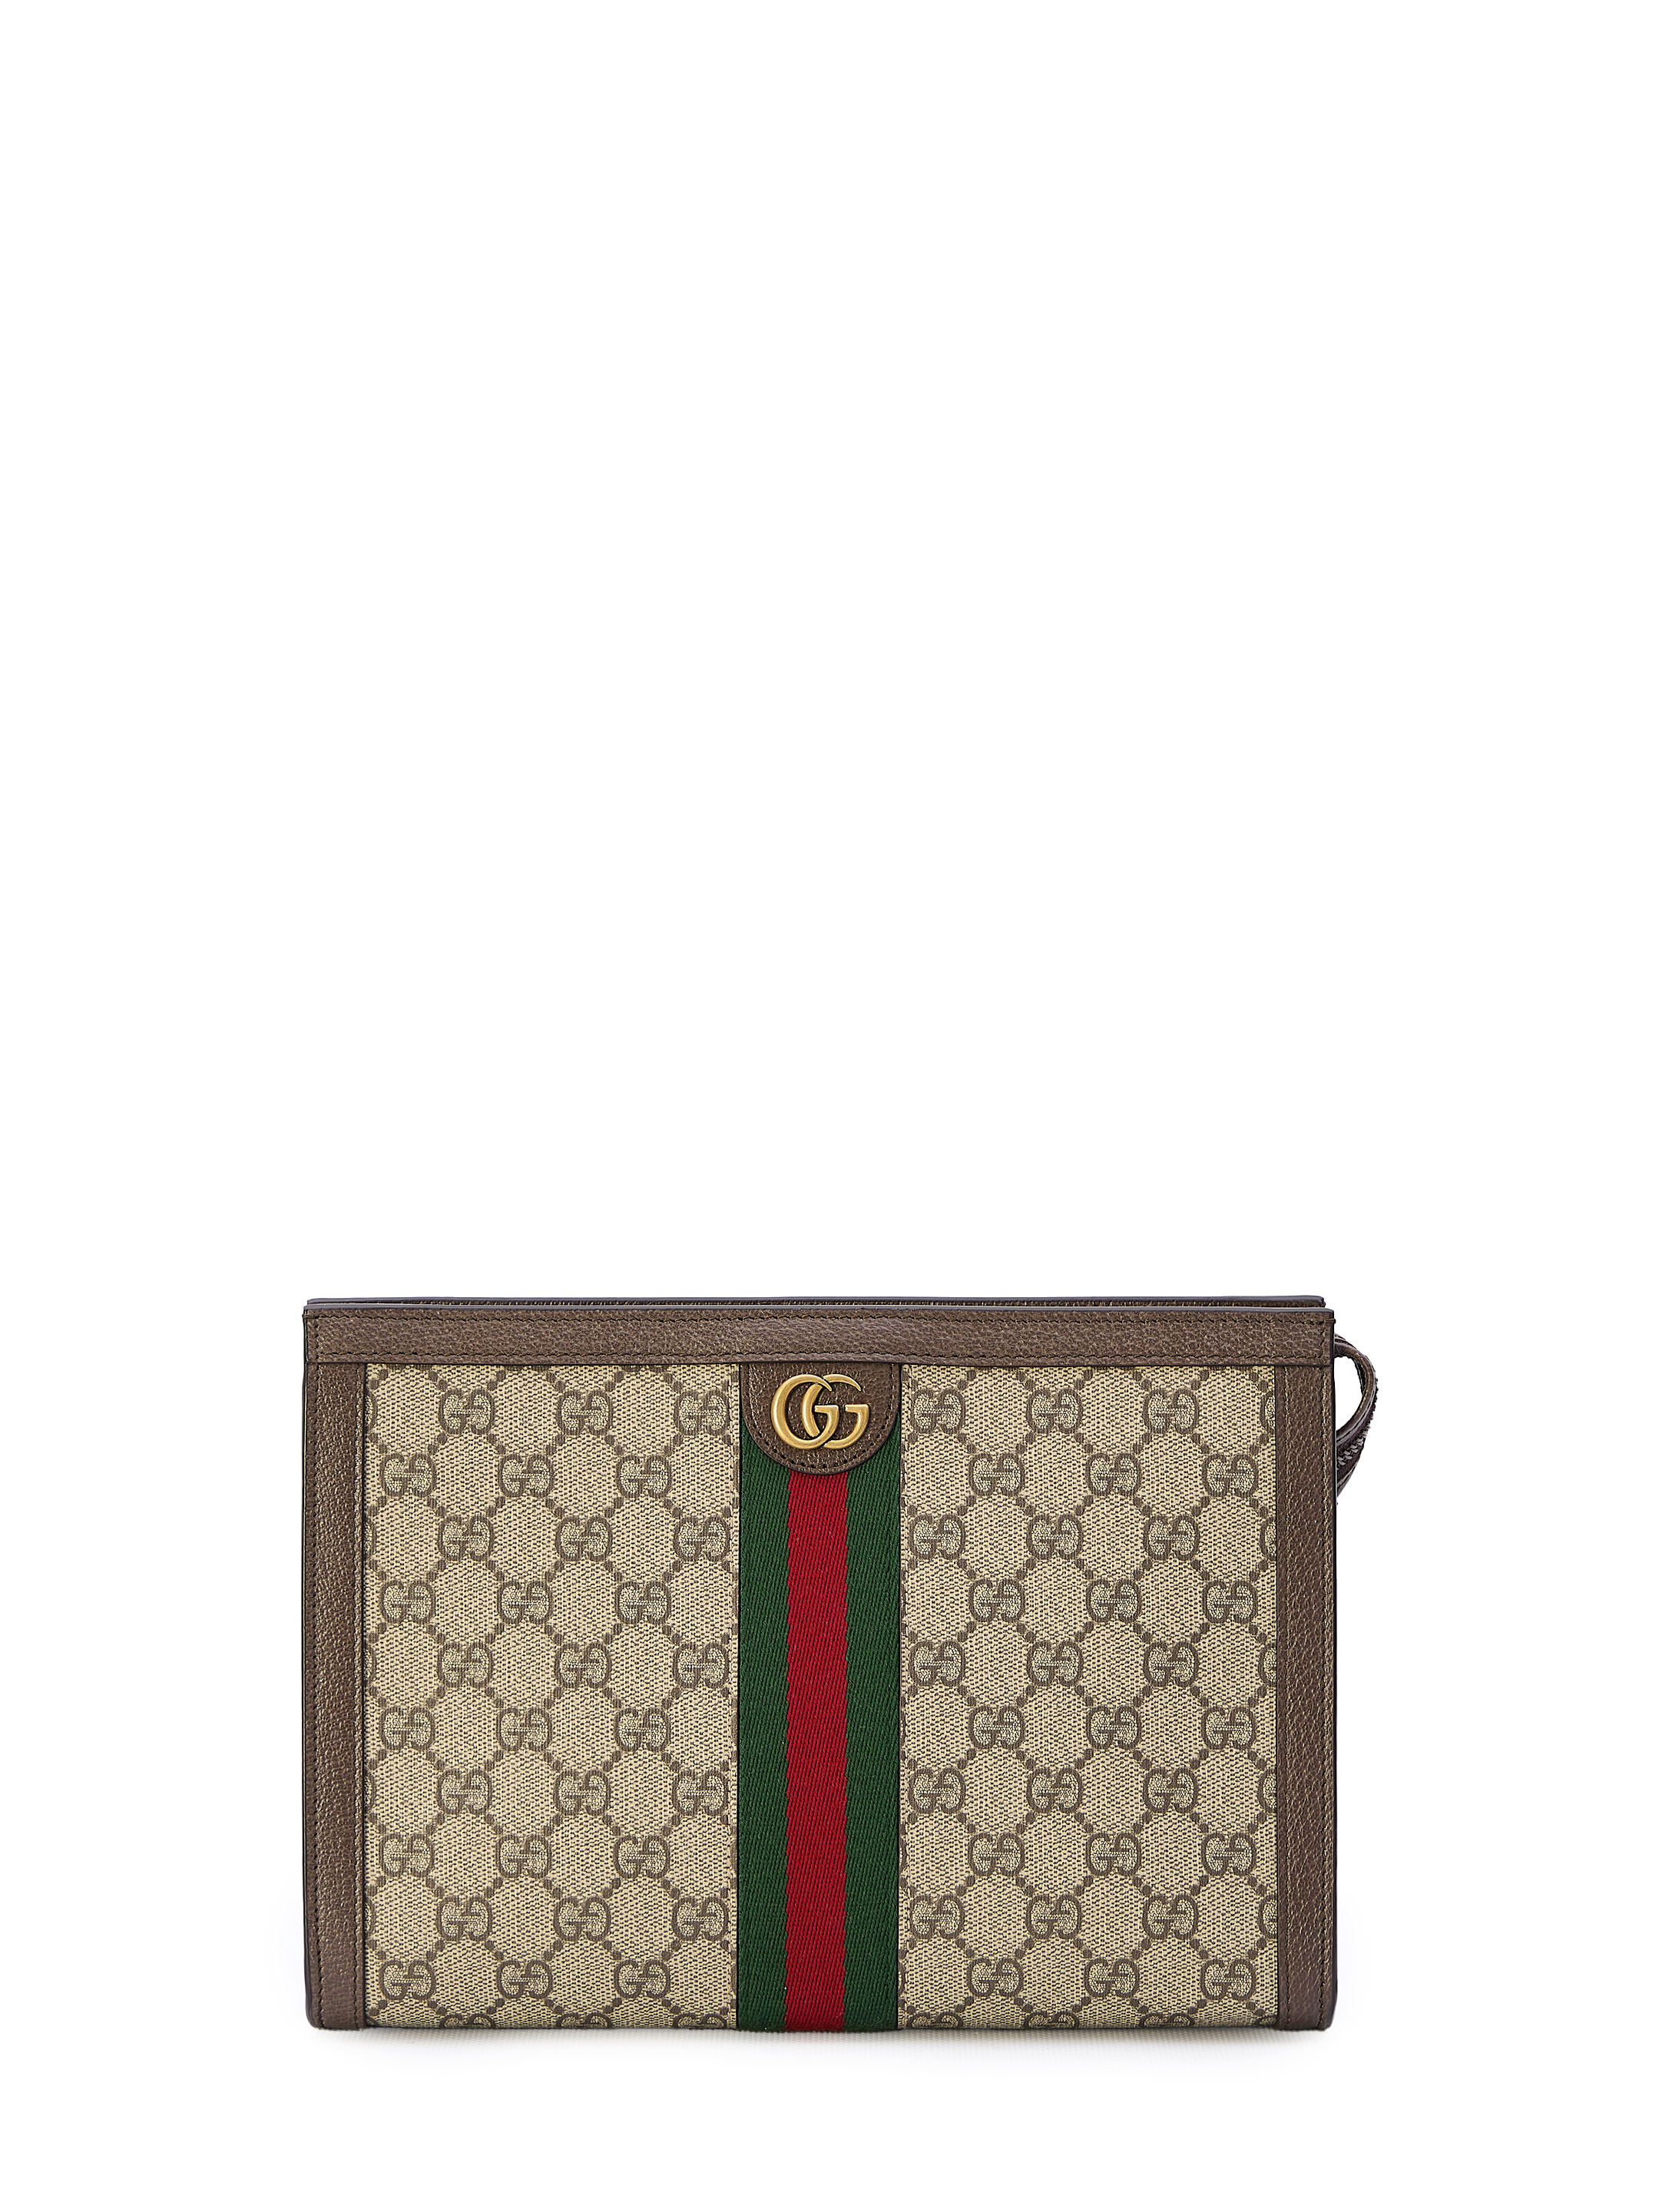 Сумка Gucci Ophidia GG, бежевый сумка gucci ophidia key case бежевый